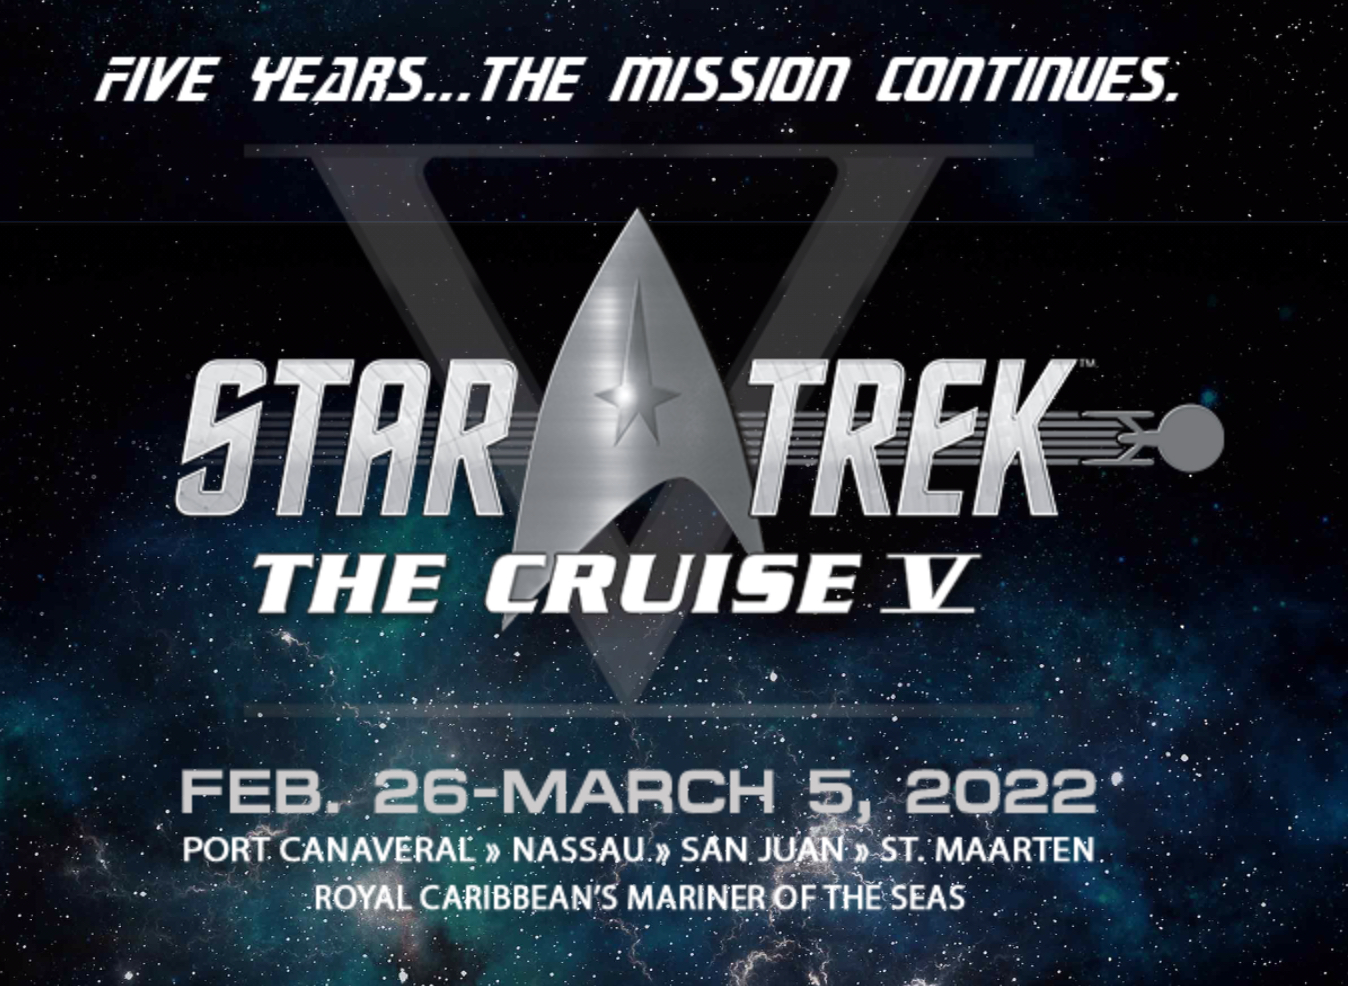 Star Trek Cruise sold out The Cruise Genius (Scott Lara)